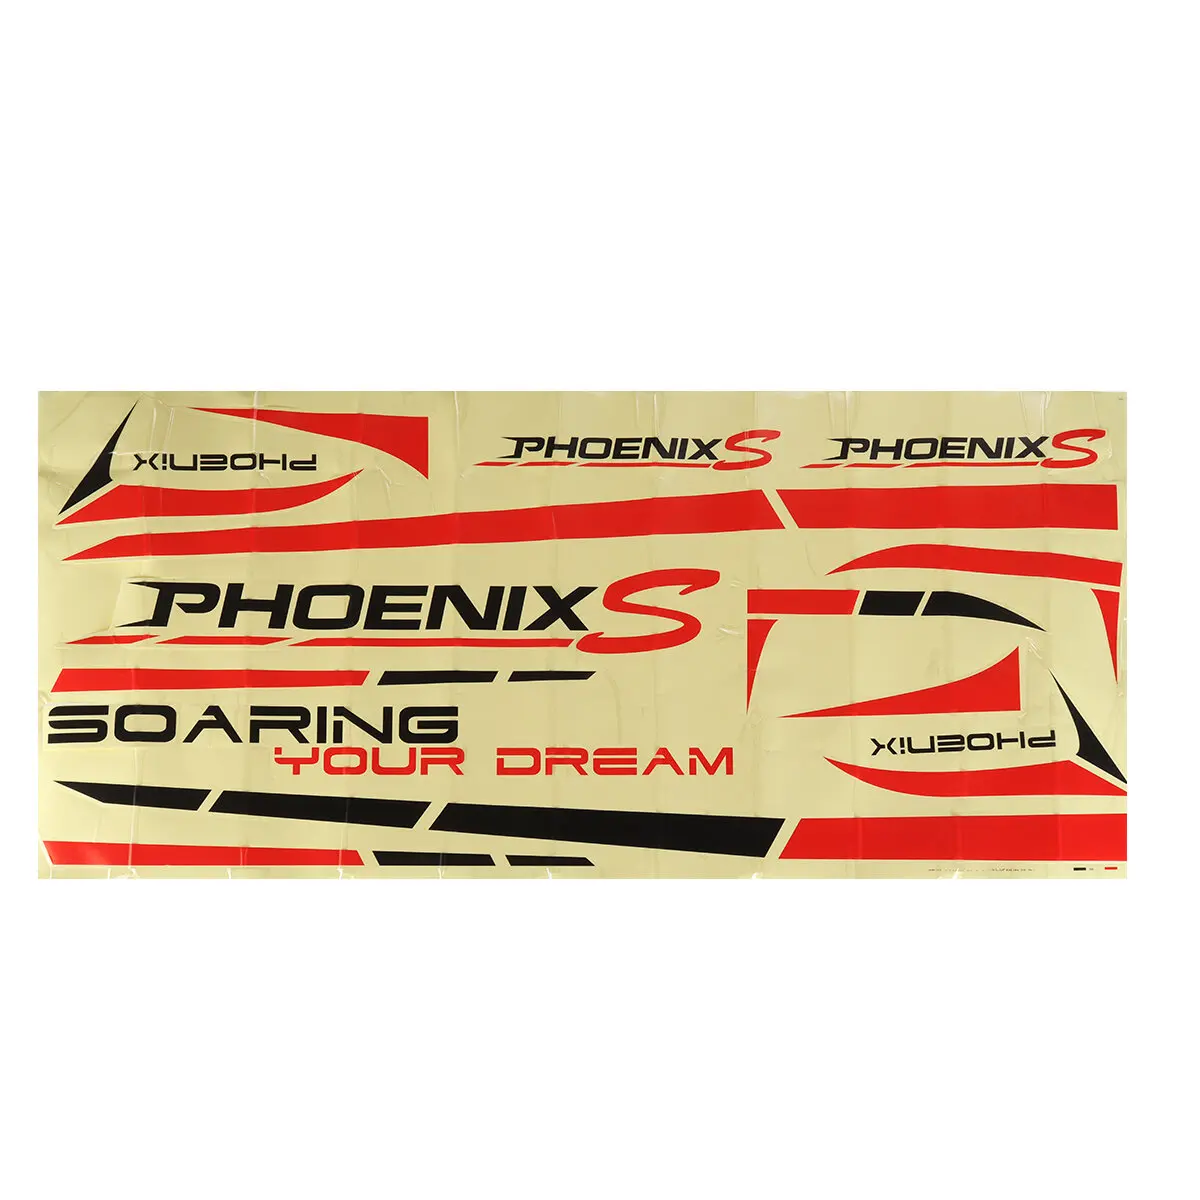 P7420703 Sticker Decal for VolantexRC PhoenixS 742-7 / 742-3 / 742-6